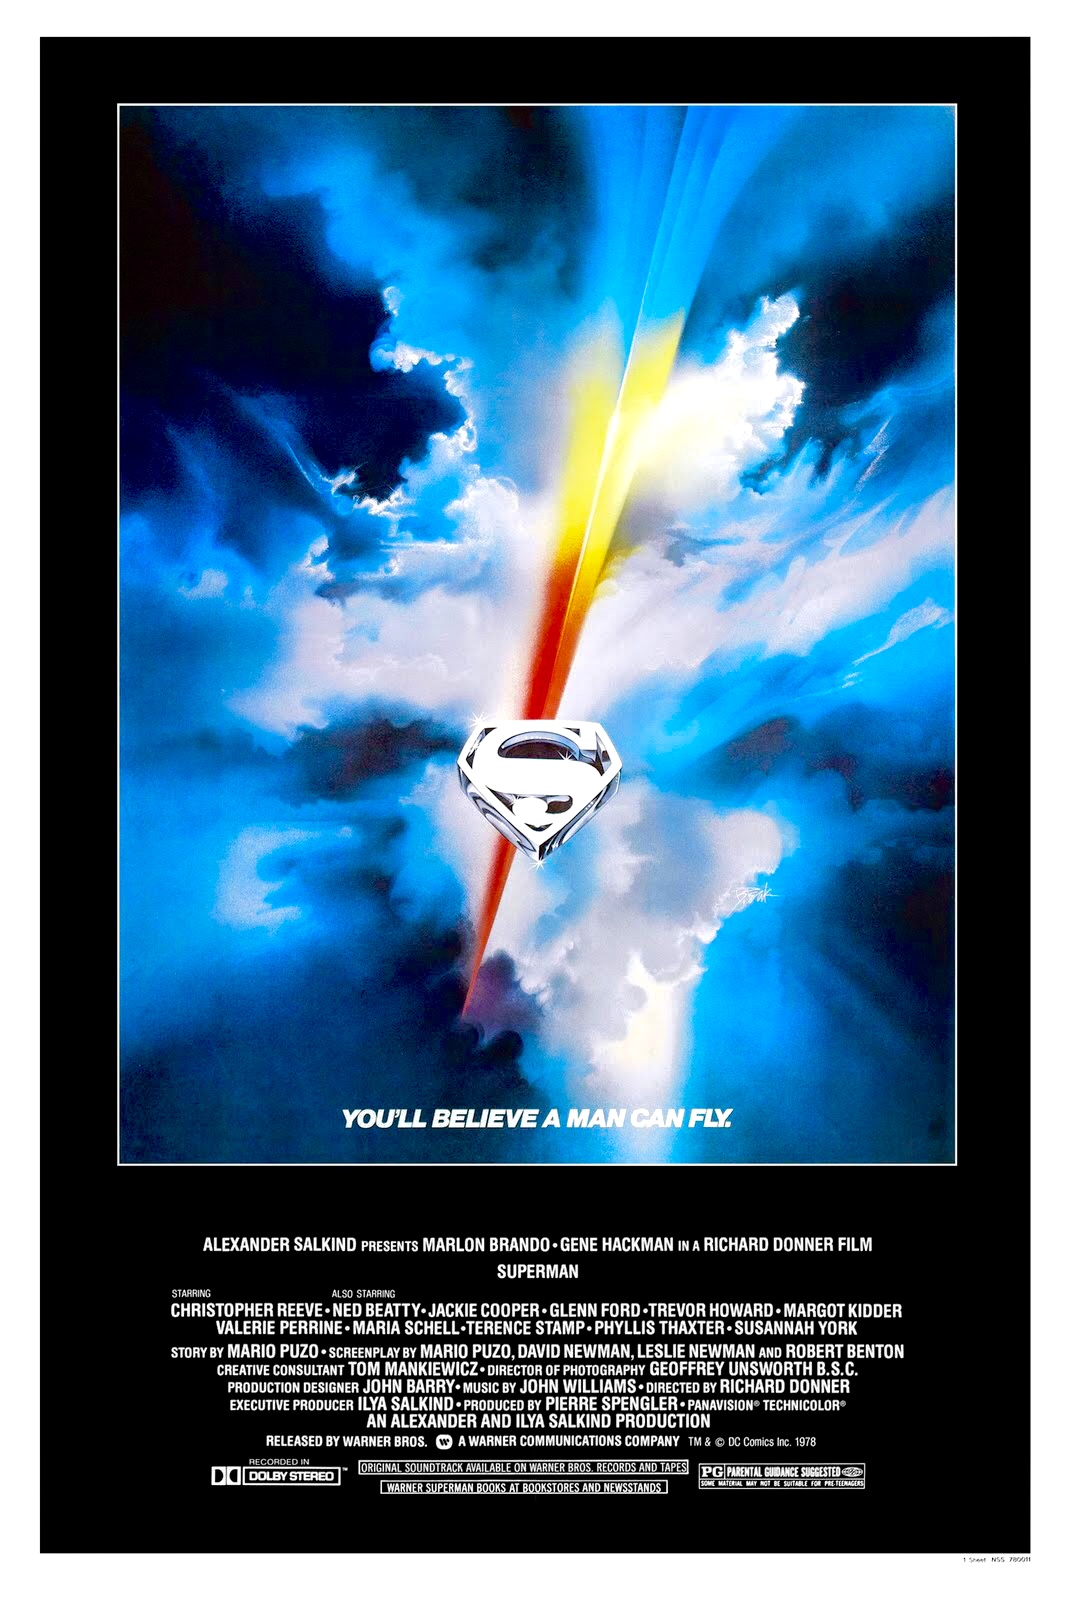 Superman 1 (1978) ซูเปอร์แมน 1 Christopher Reeve